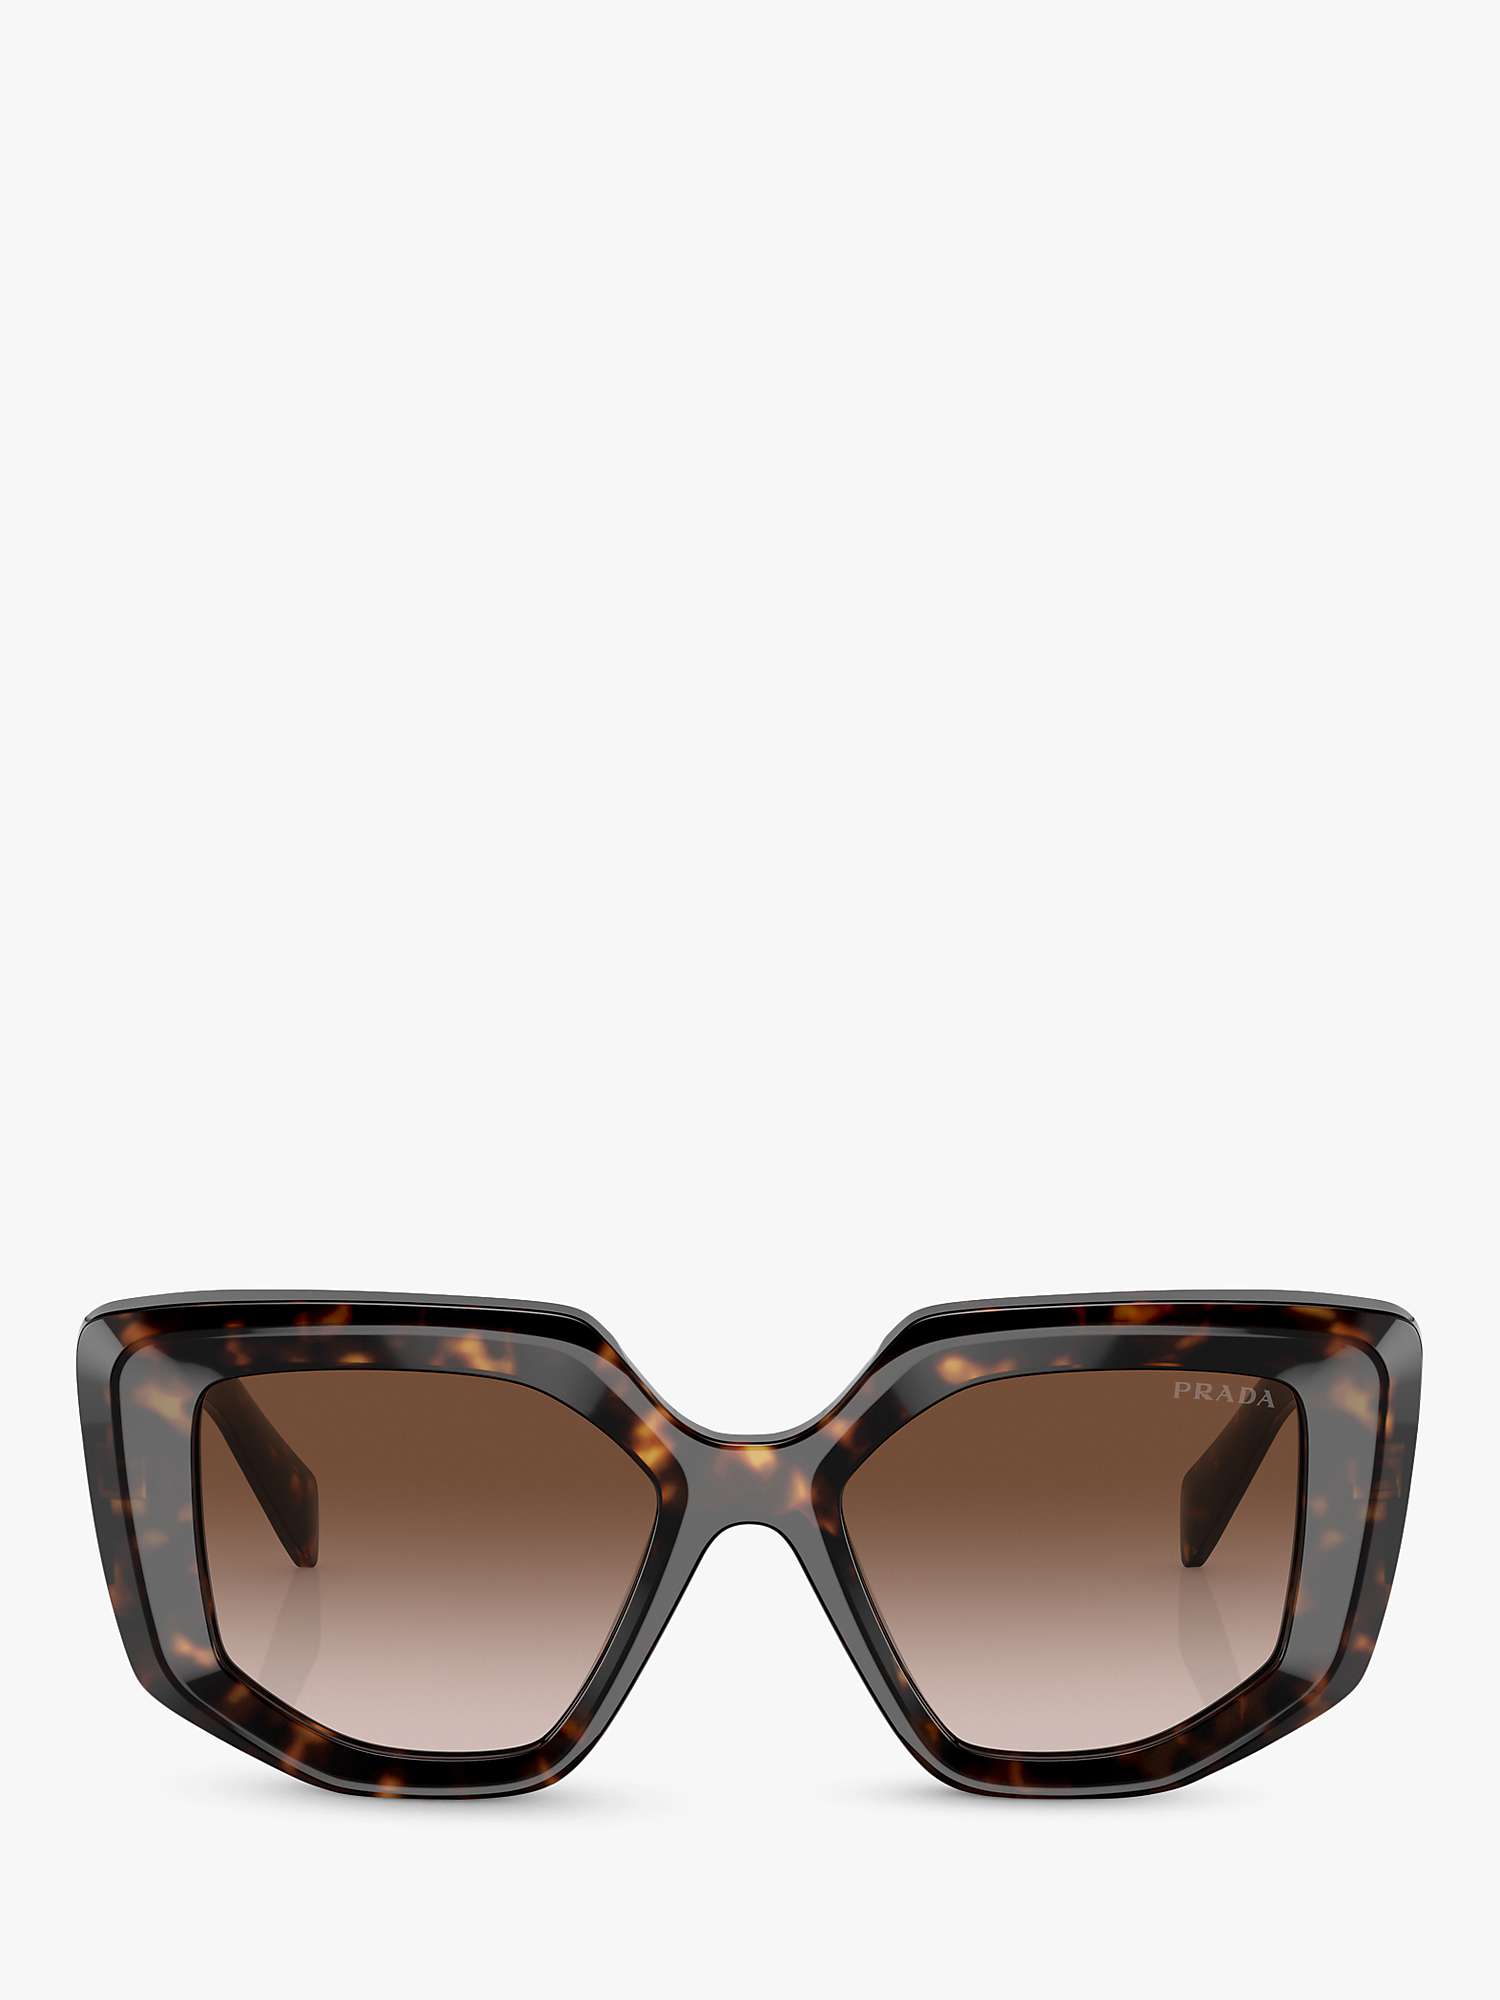 Buy Prada PR 14ZS Women's Irregular Sunglasses, Tortoise/Brown Gradient Online at johnlewis.com